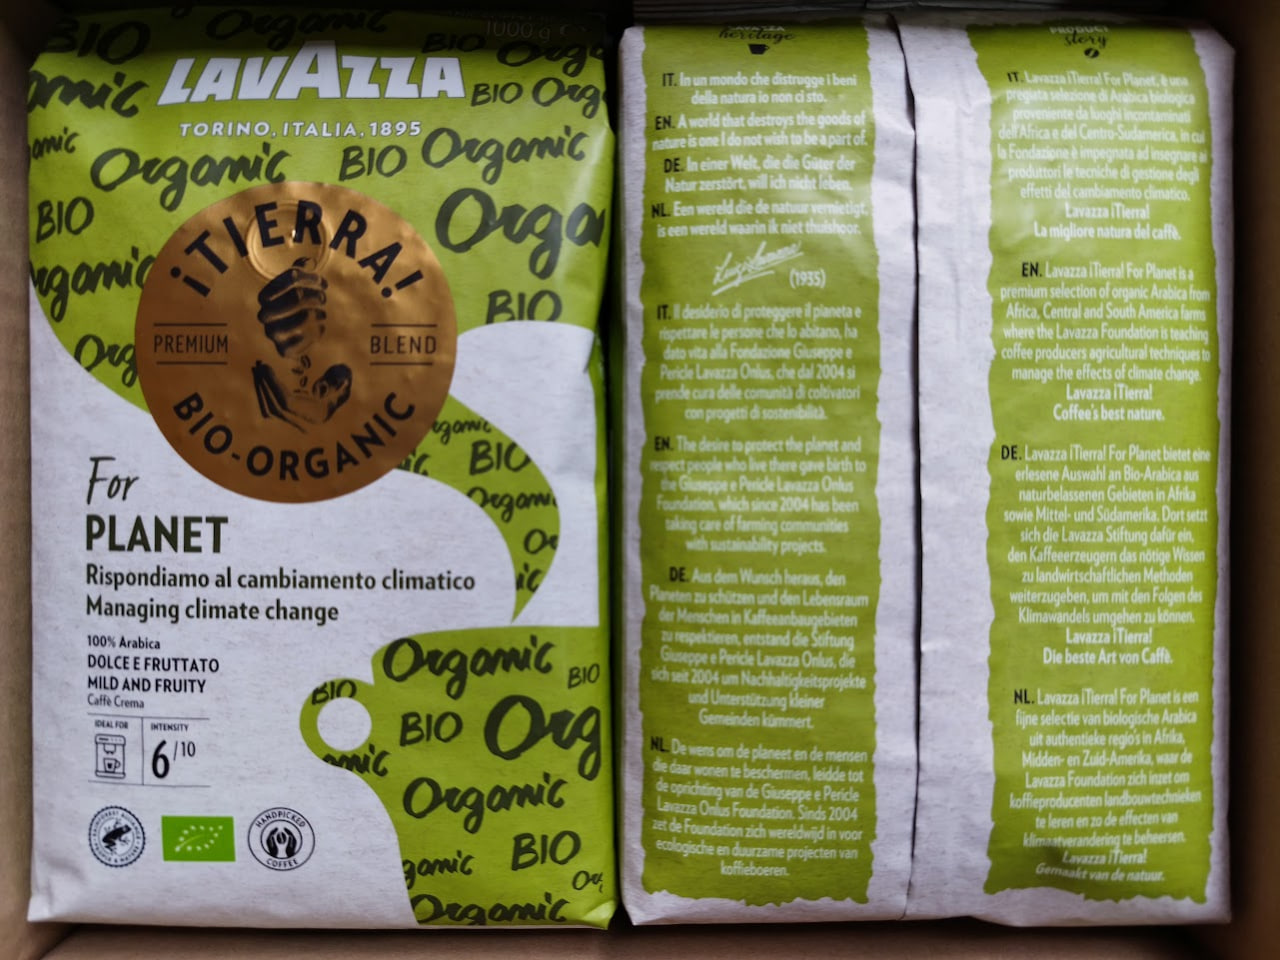 Kohvioad "LAVAZZA" ¡Tierra! Bio-Organic